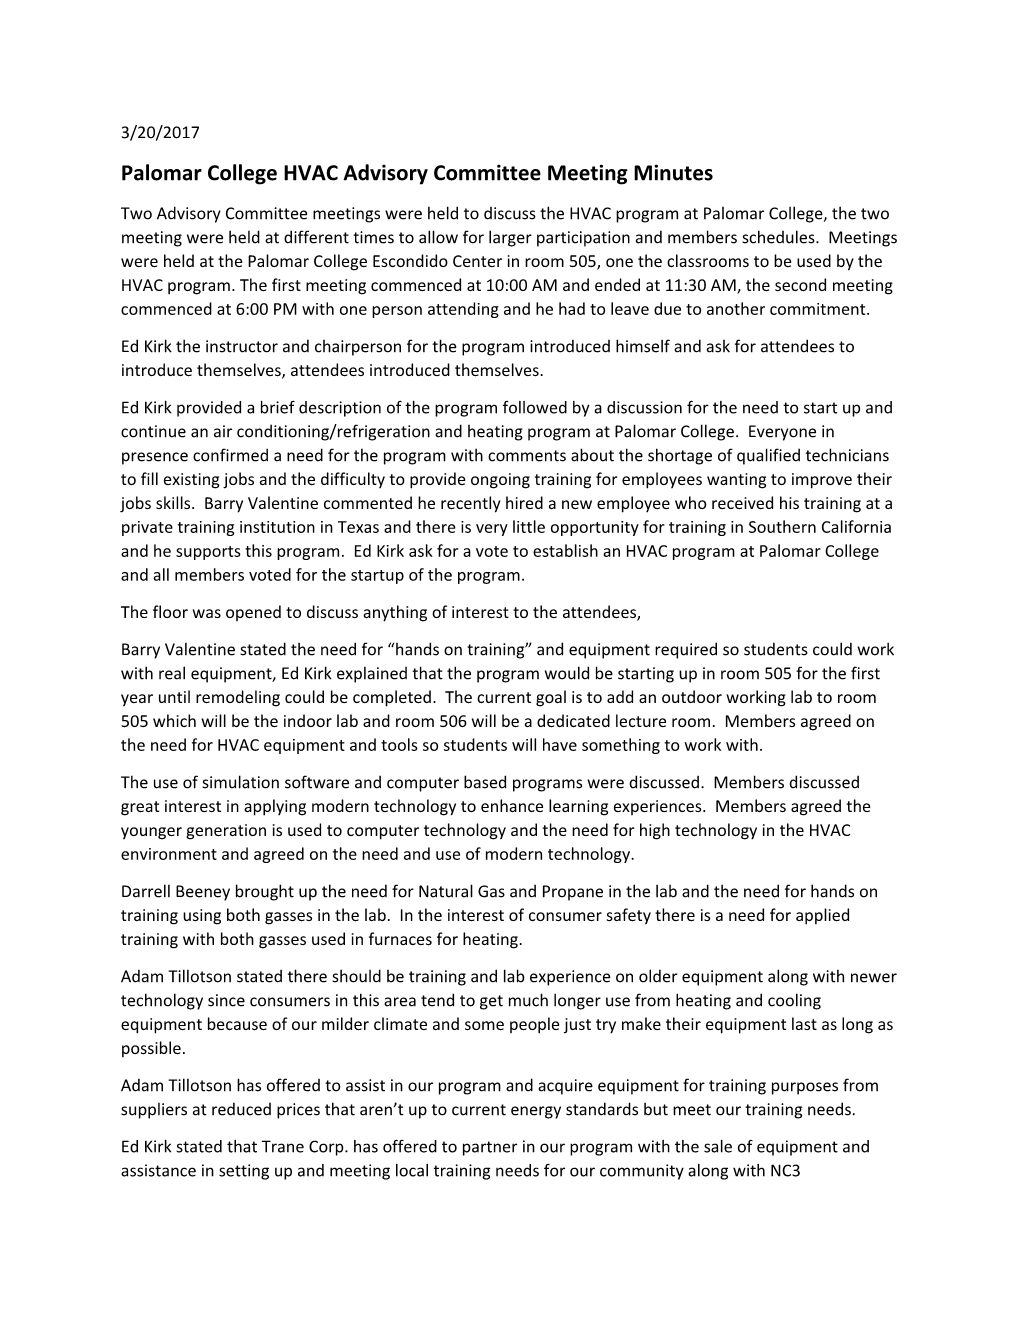 Palomar College HVAC Advisory Committee Meeting Minutes